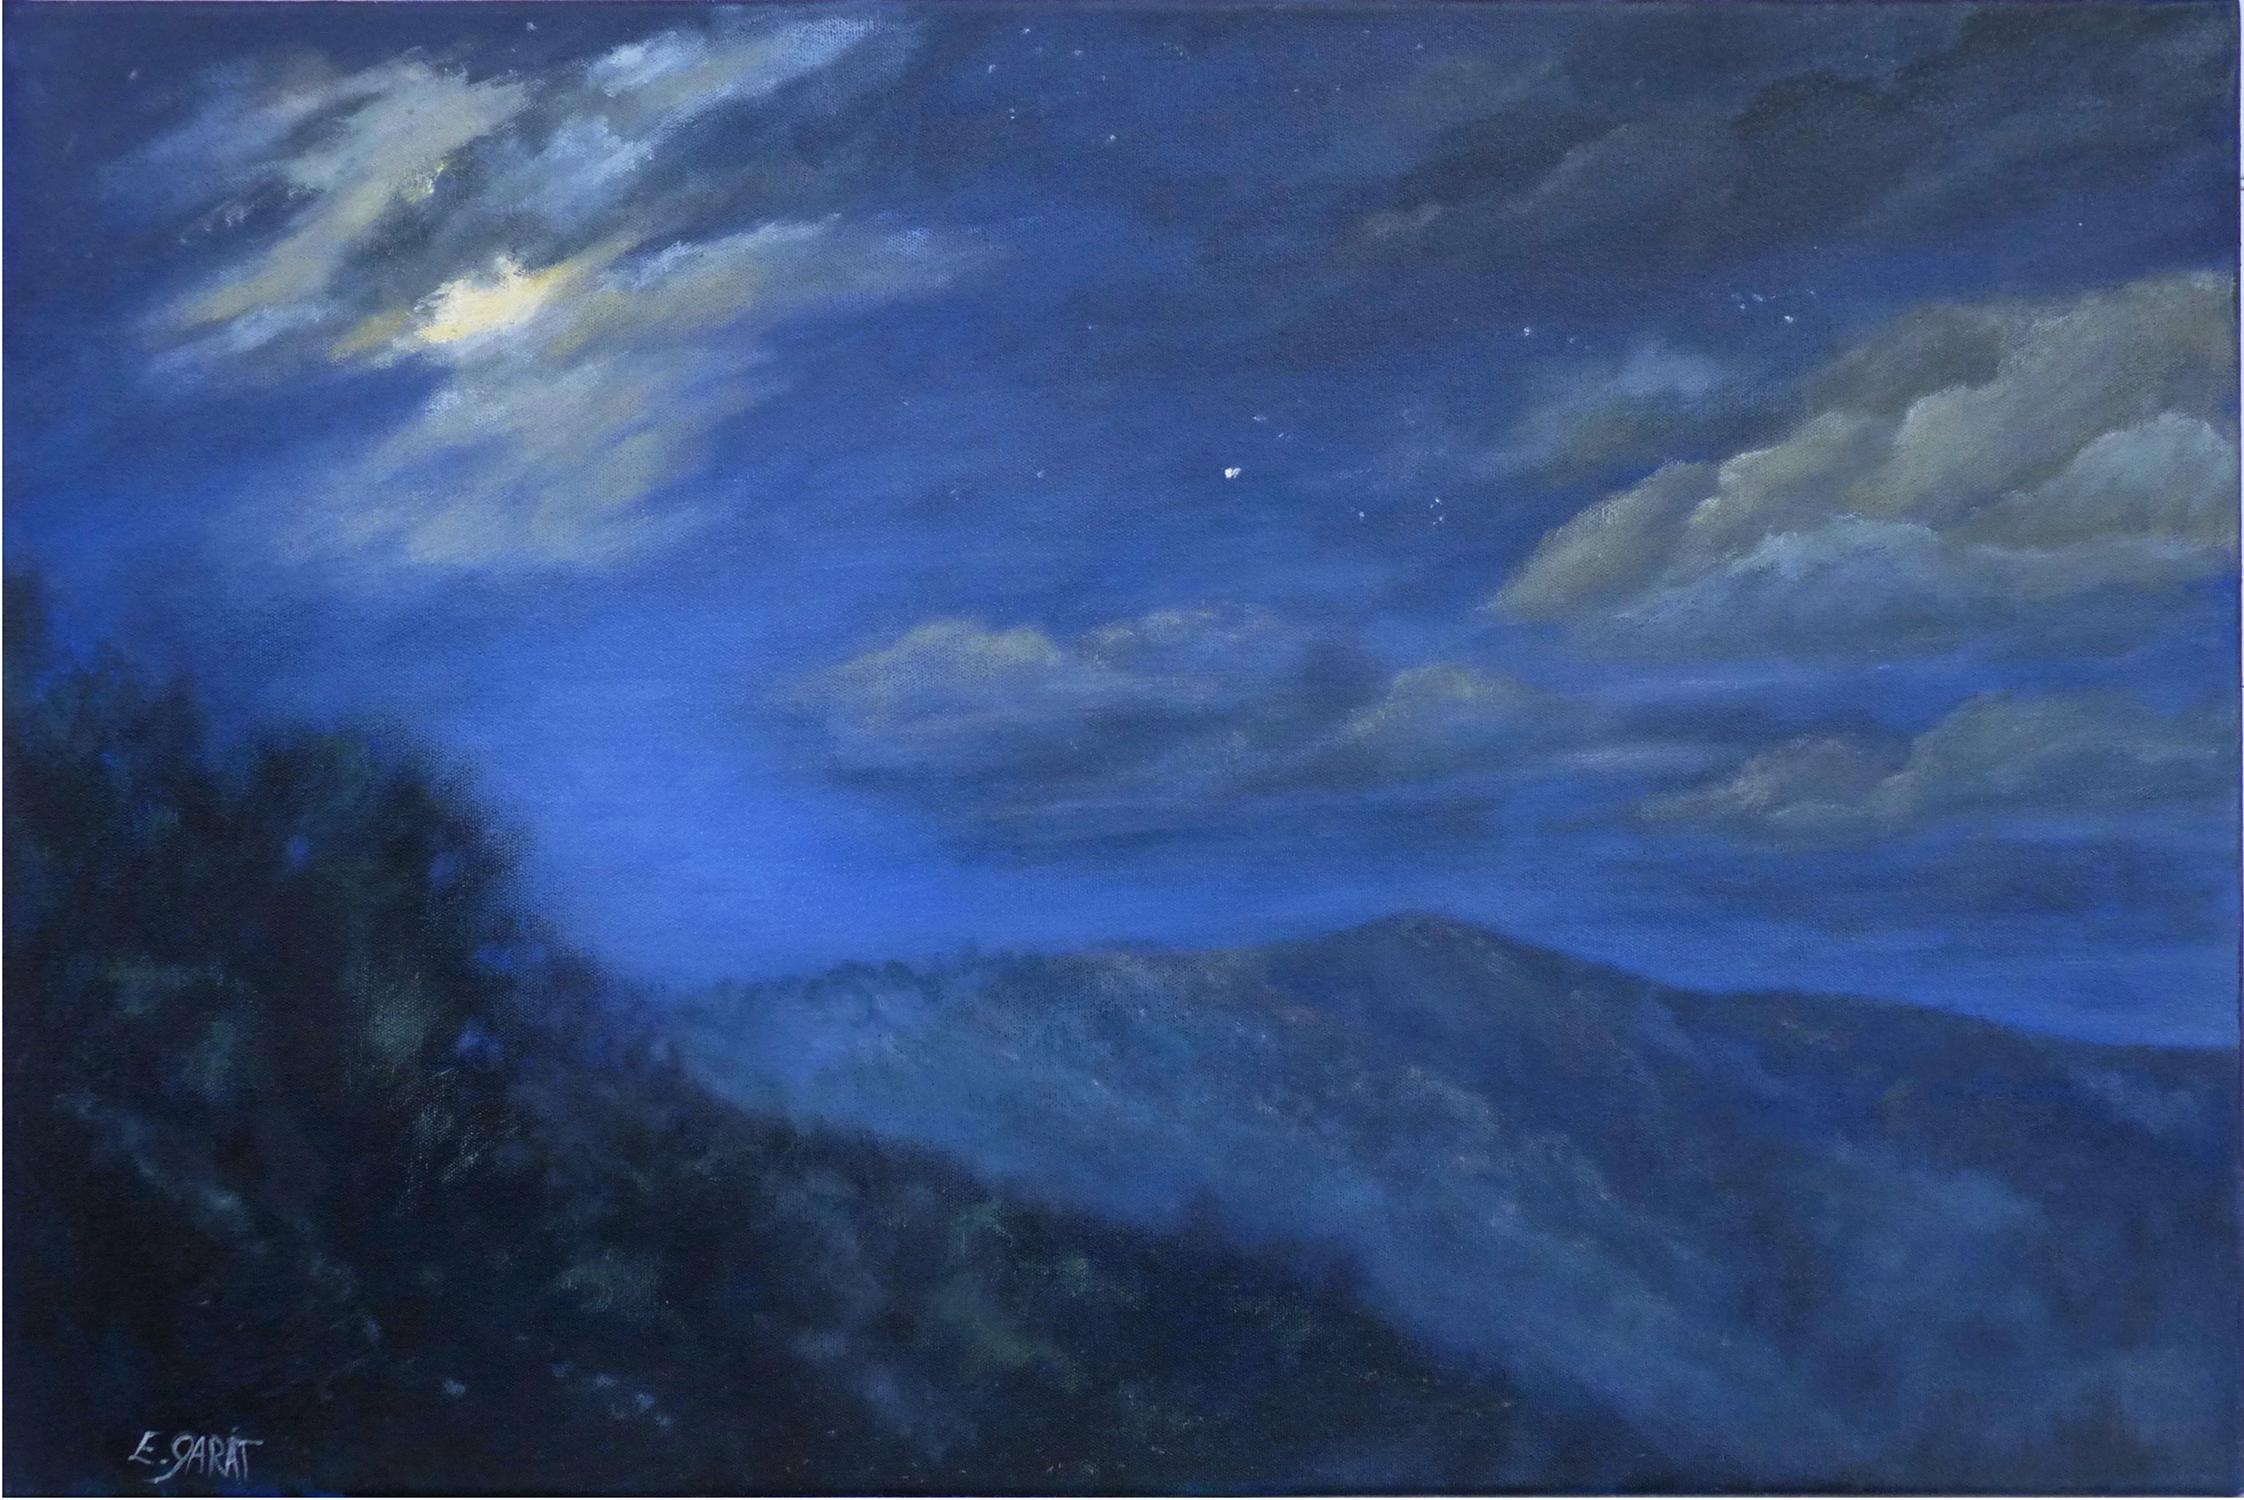 Elizabeth Garat Landscape Painting - Quiet Breathes This Night, Oil Painting